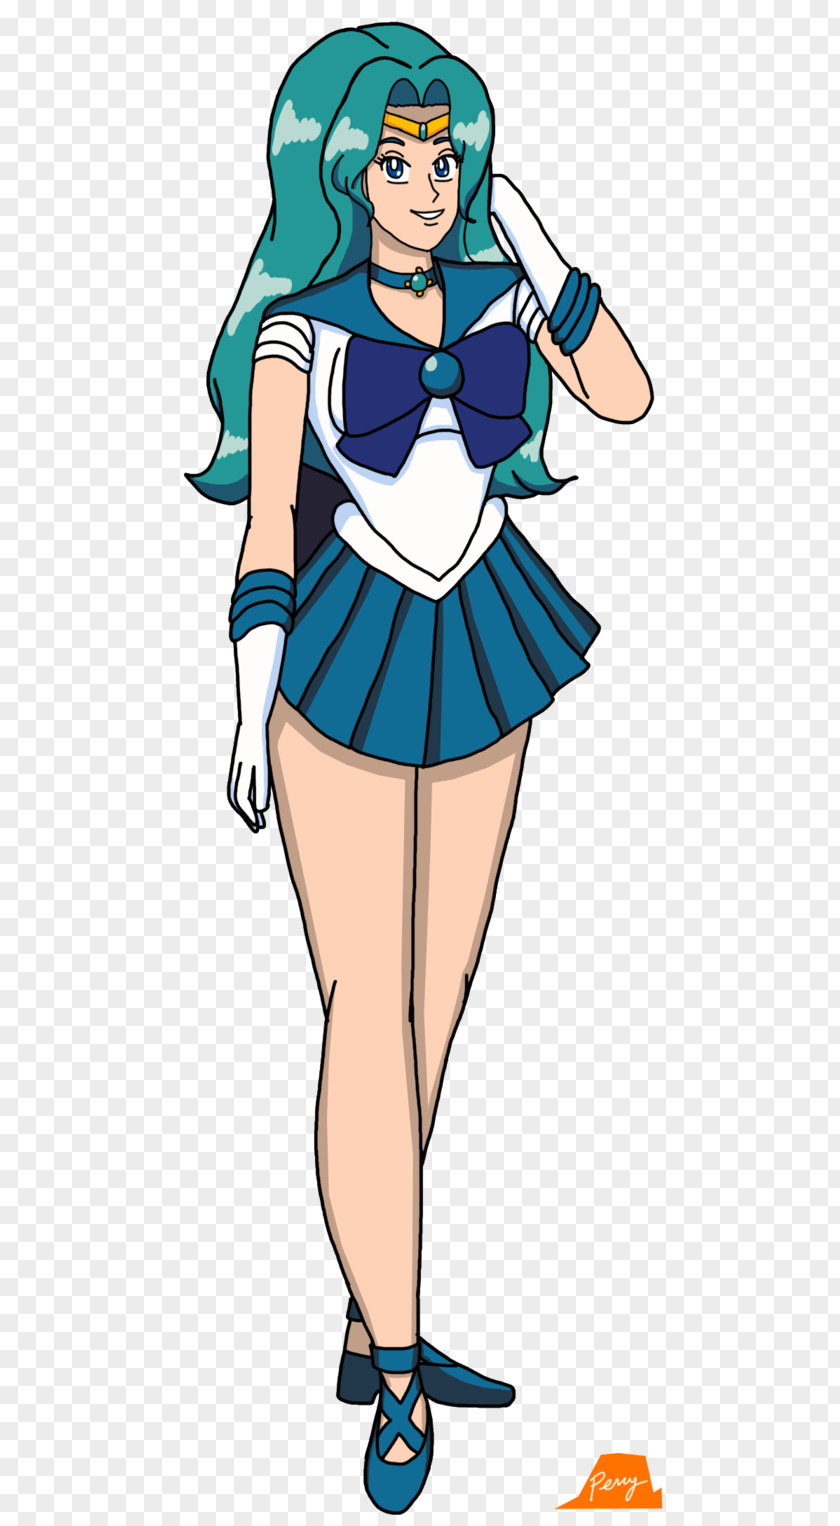 Sailor Neptune Costume Cheerleading Uniforms Cartoon Clip Art PNG